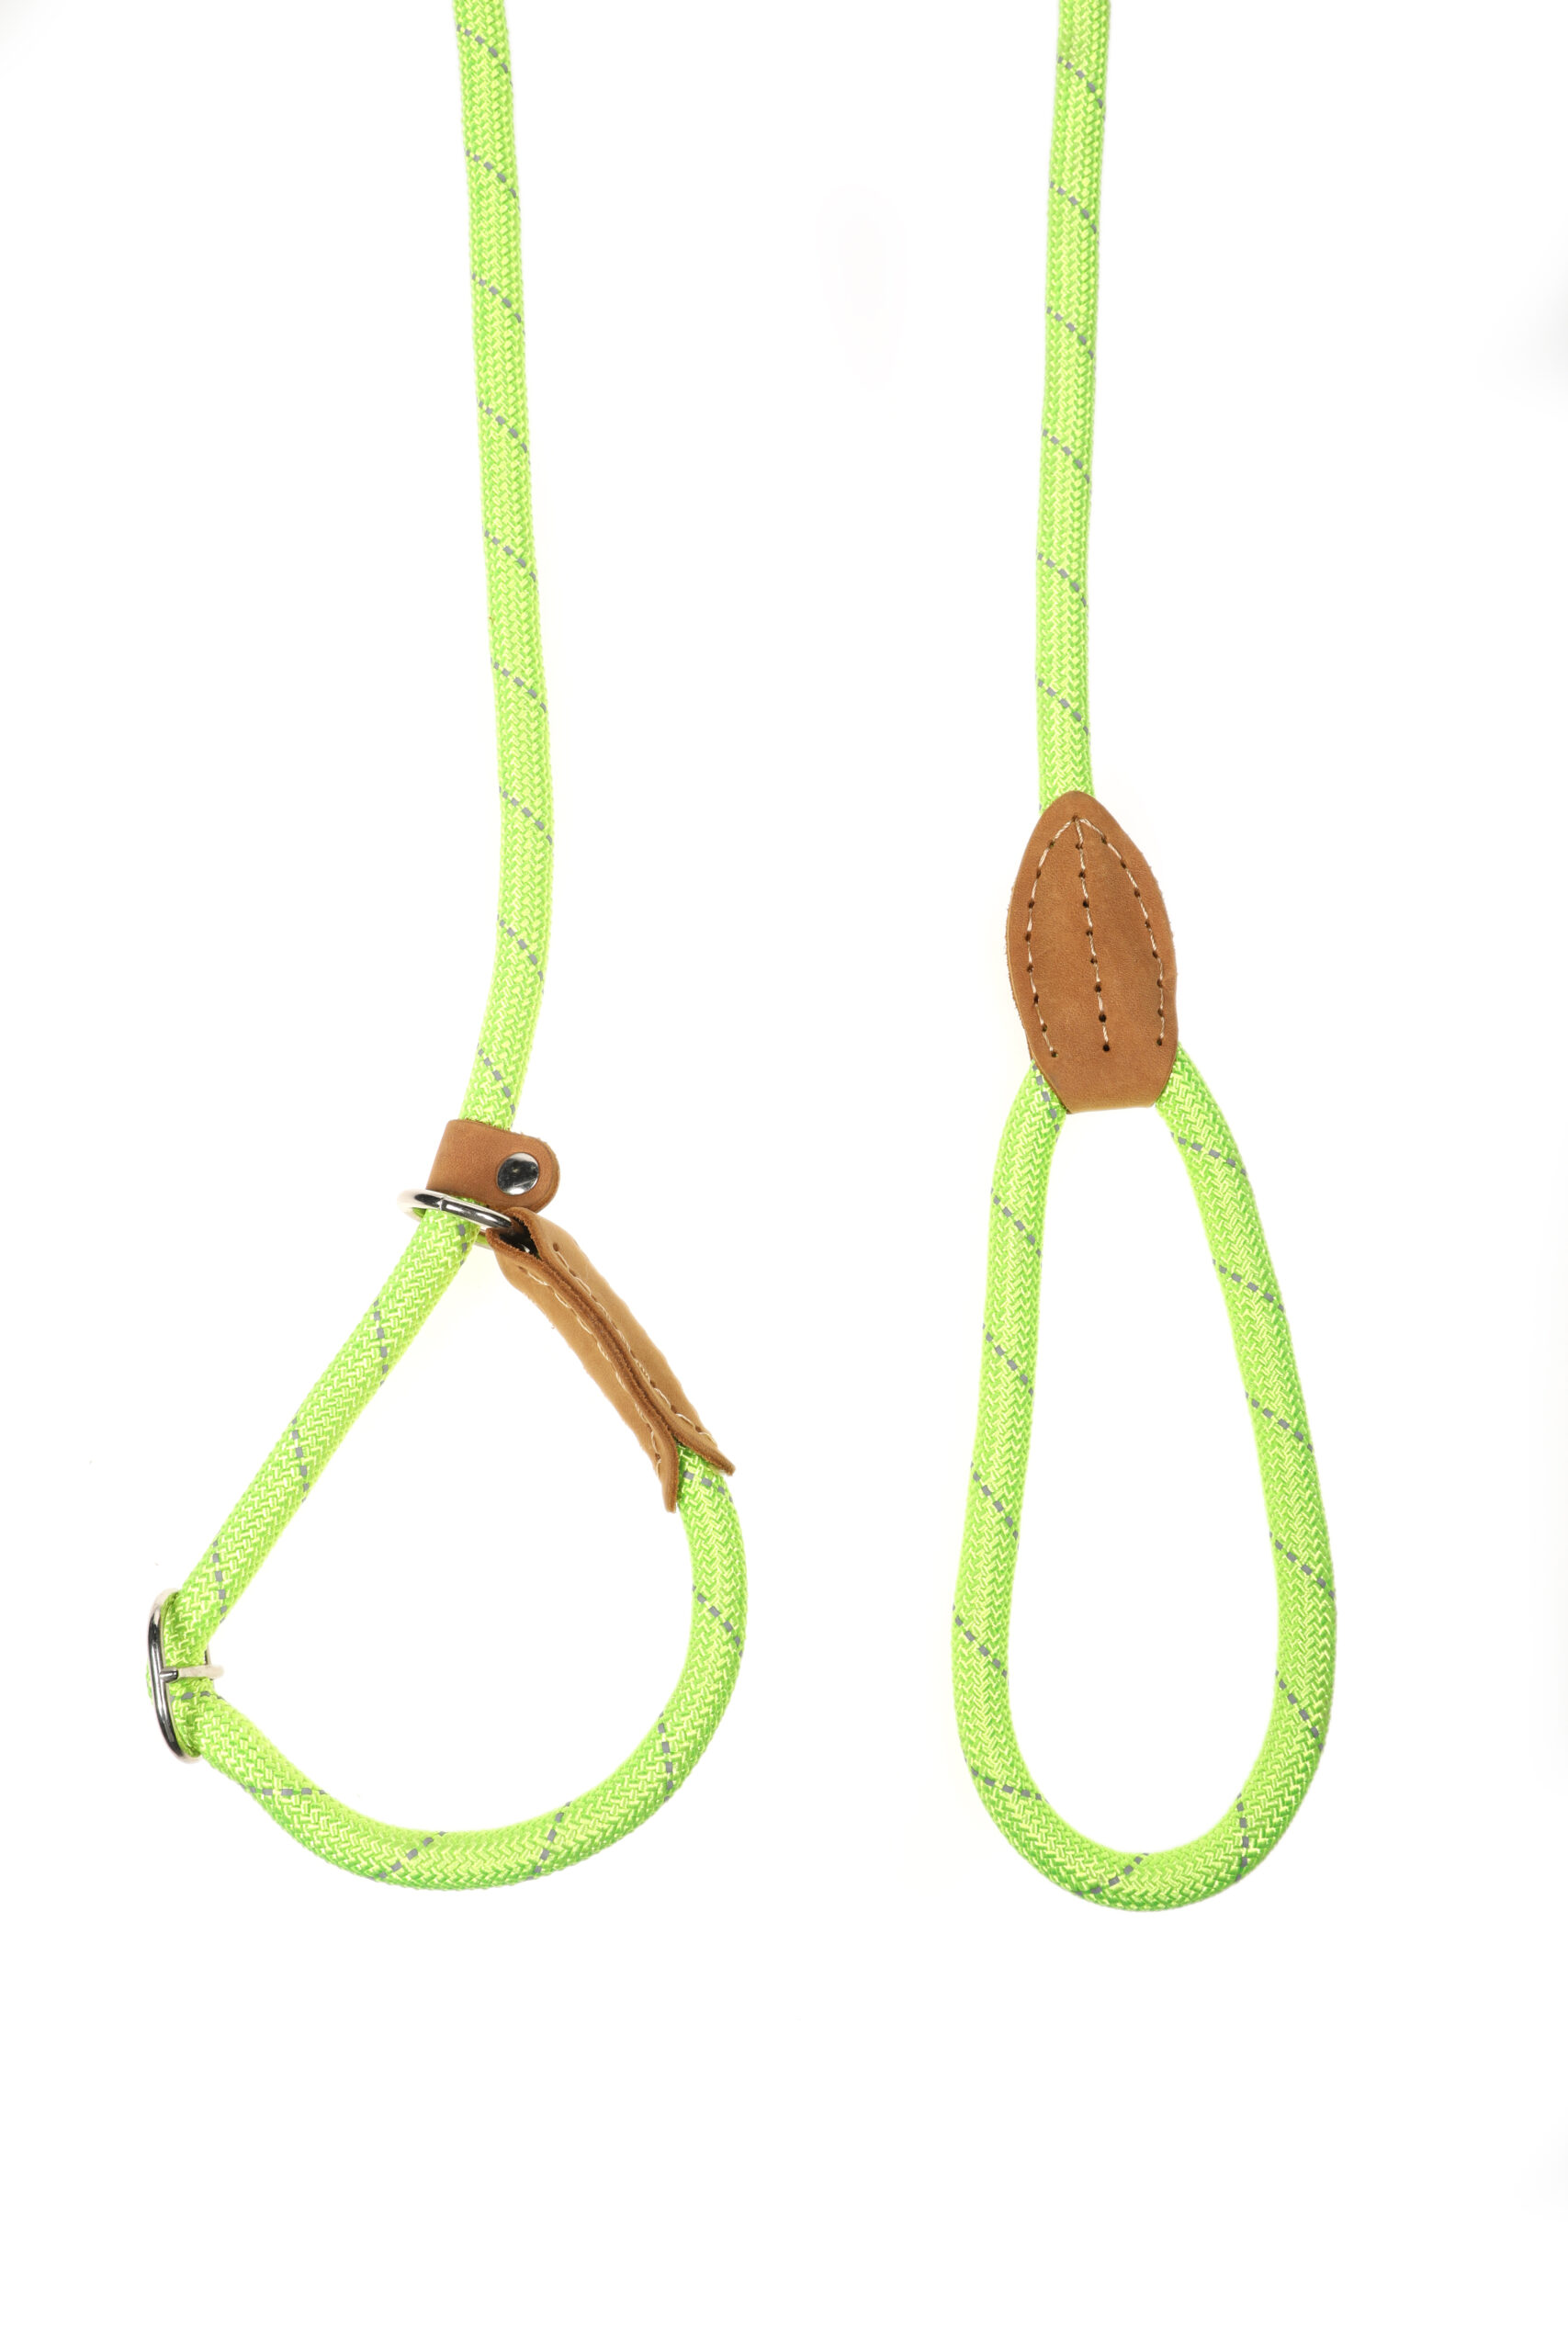 Doodlebone Originals Apple Green Rope Dog Slip Lead